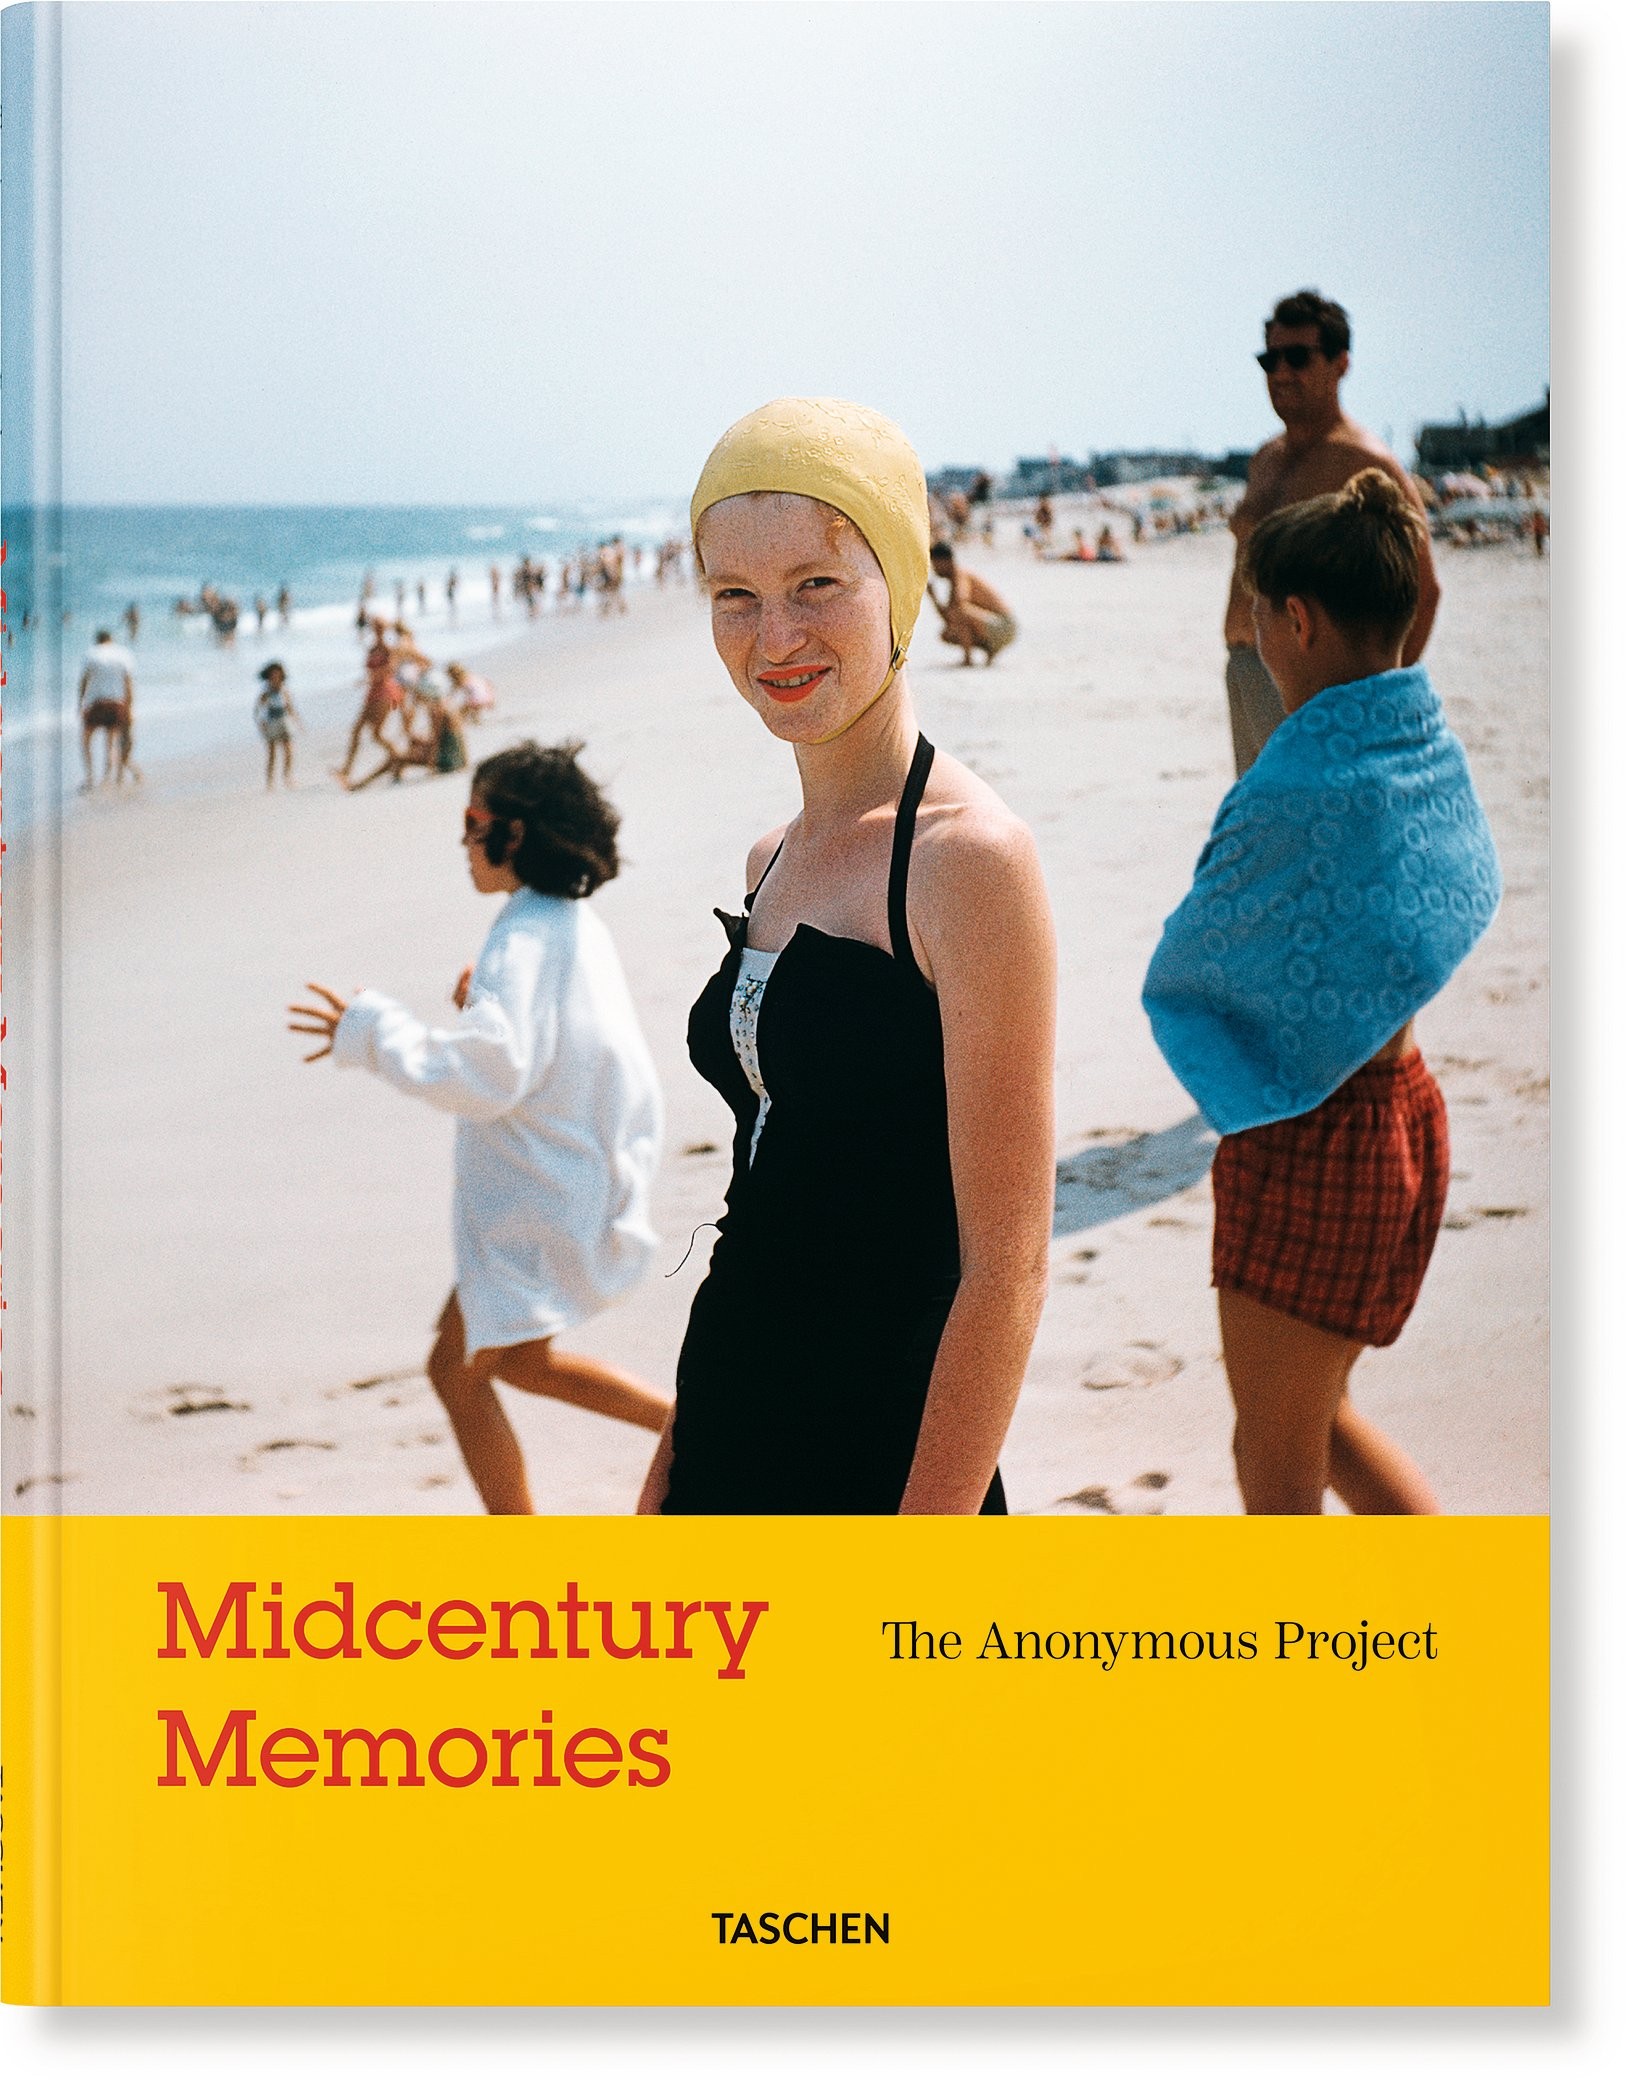 Midcentury memories